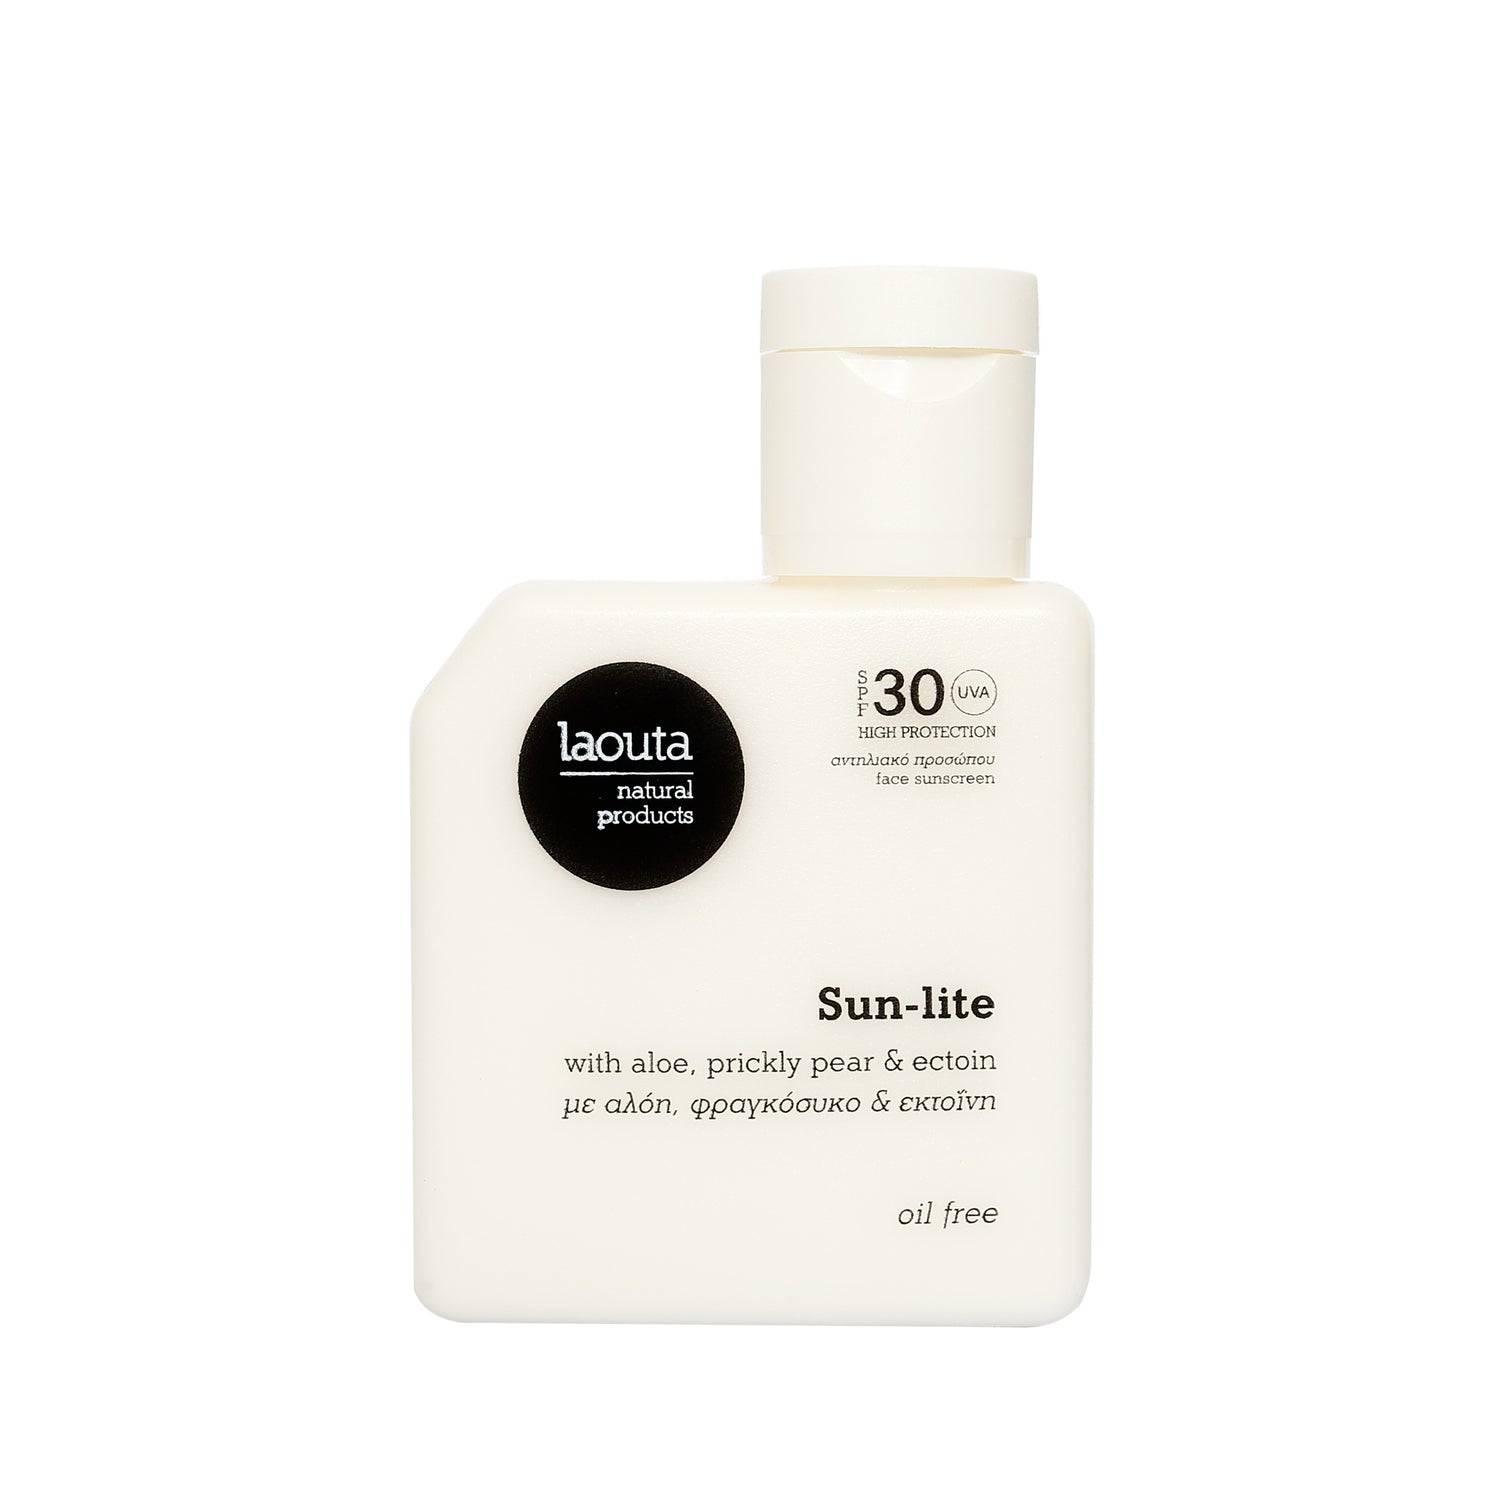 Laouta Sun-lite | Oil free face sunscreen